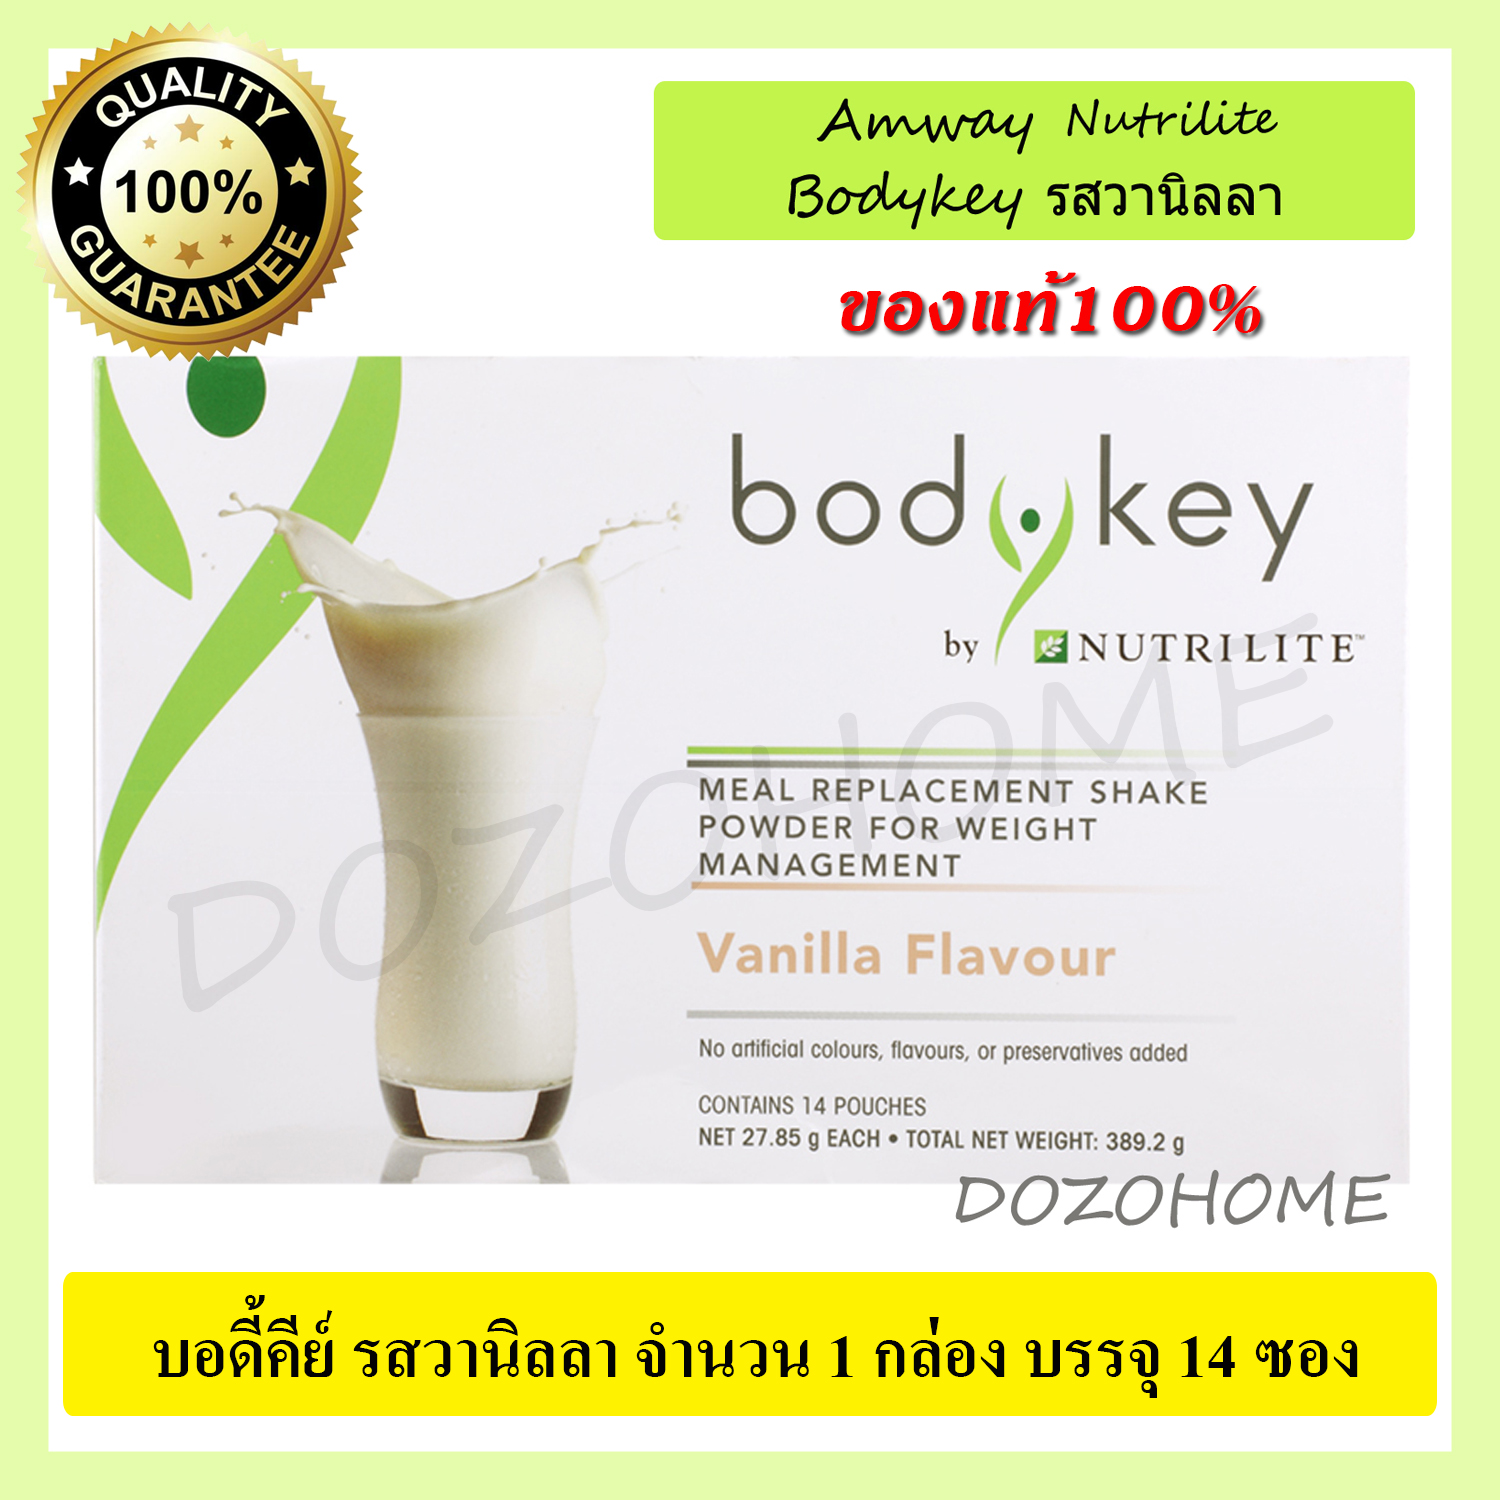 Amway Bodykey by NUTRILITE Vanilla Flavour แอมเวย์ บอดี้คีย์ รสวานิลลา